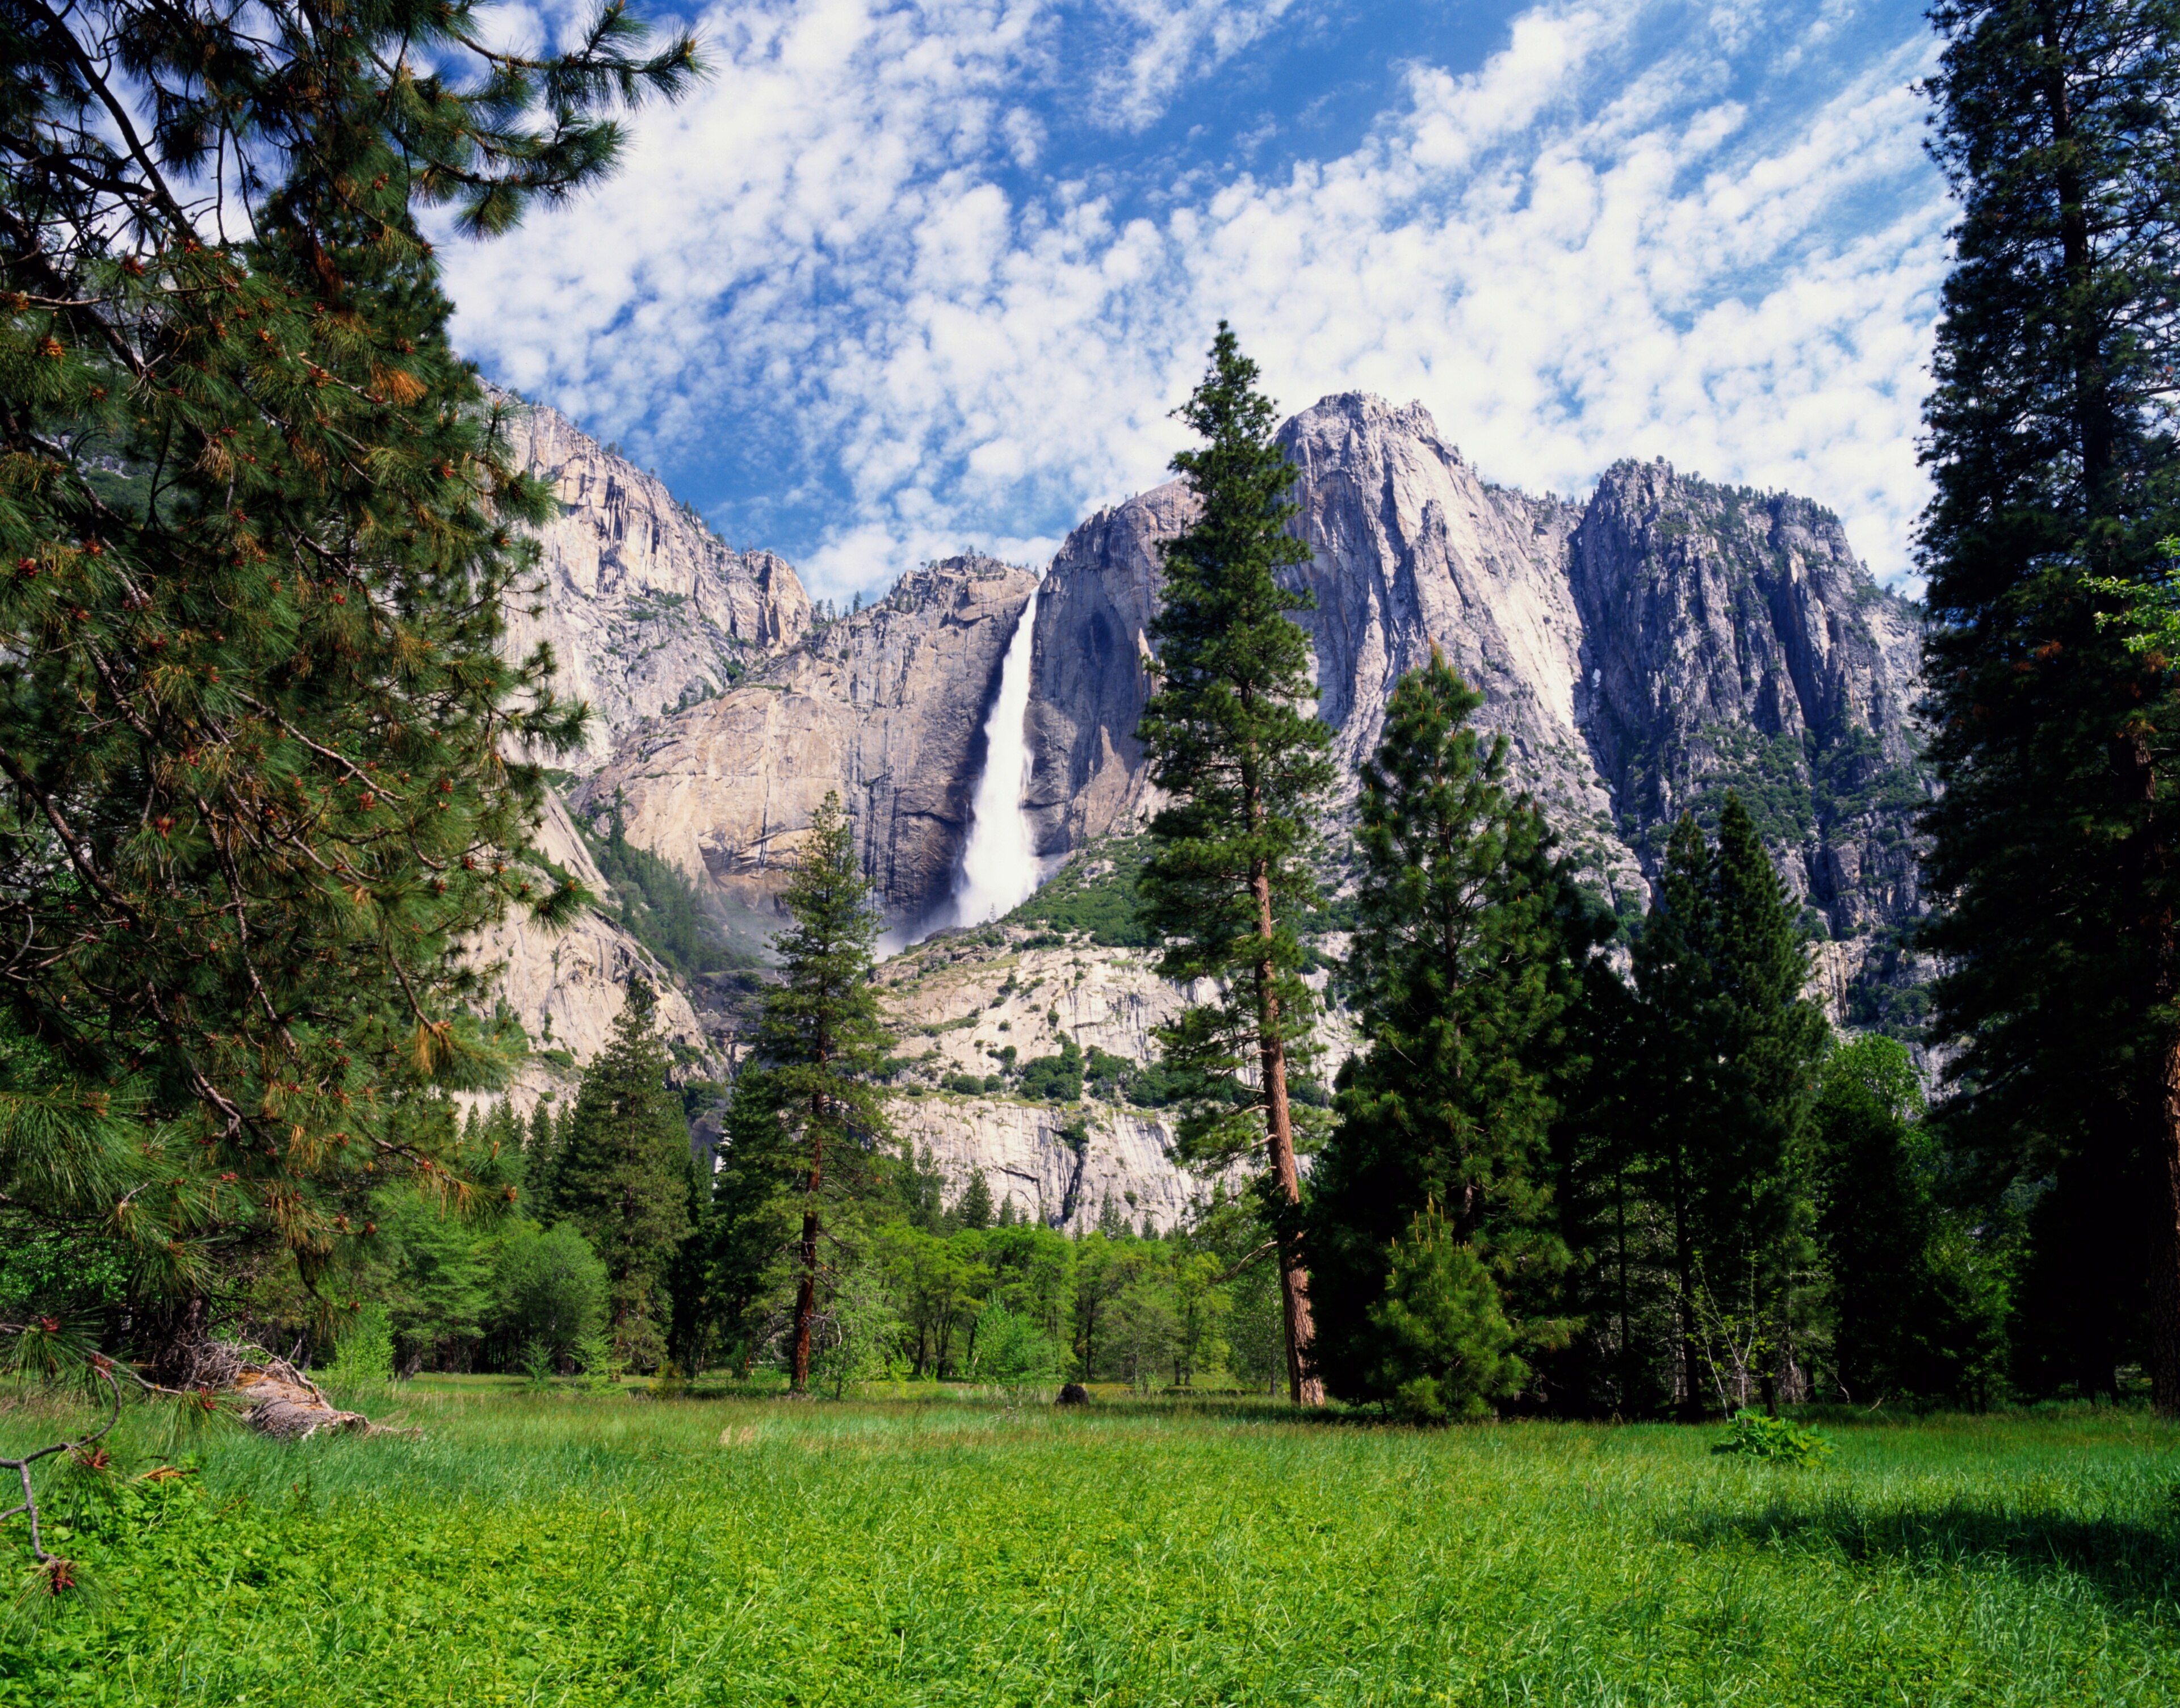 Yosemite National Park, California, United States of America